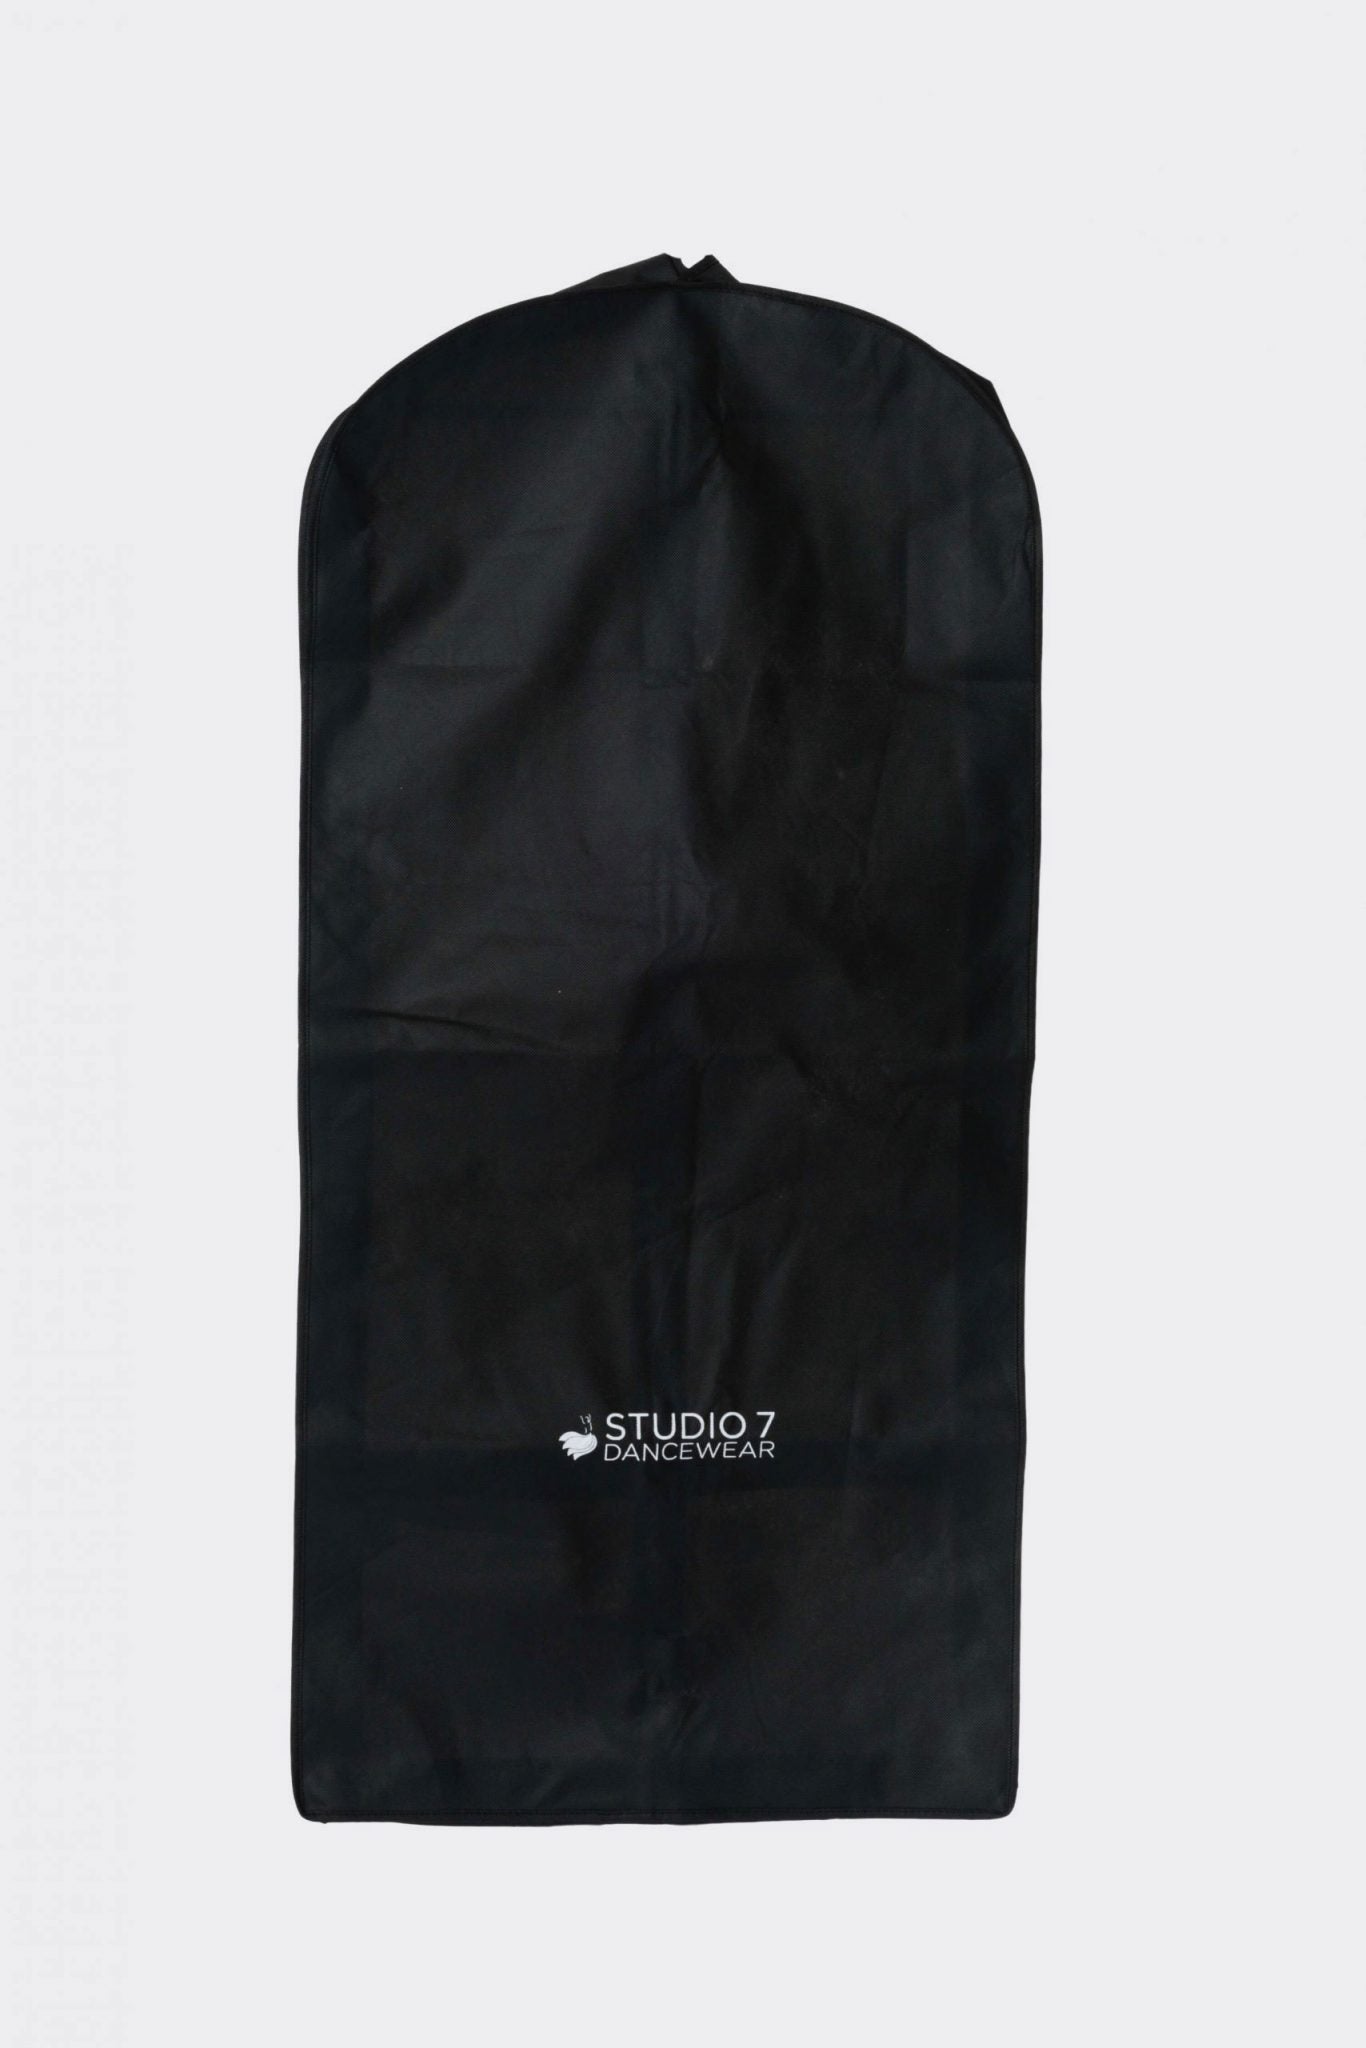 Studio7 Short Garment Bag